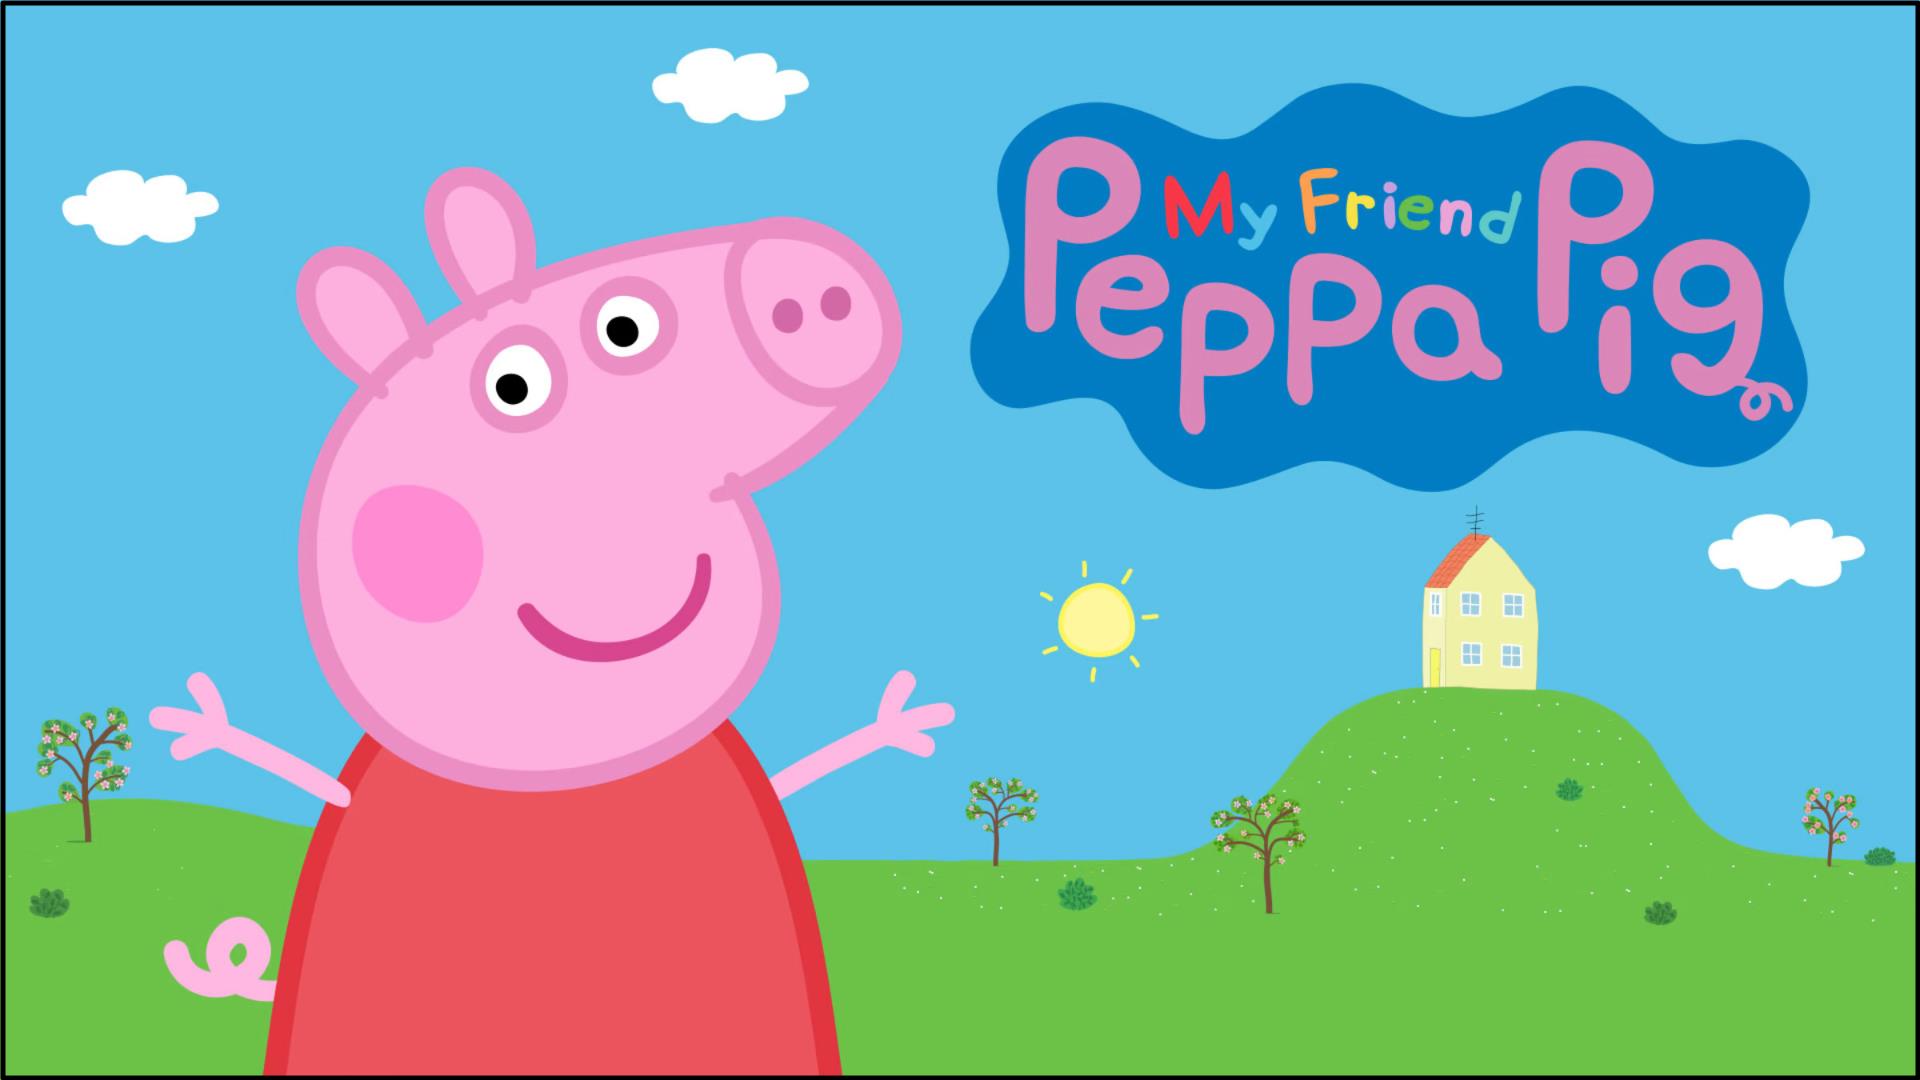 2 My Friend Peppa Pig